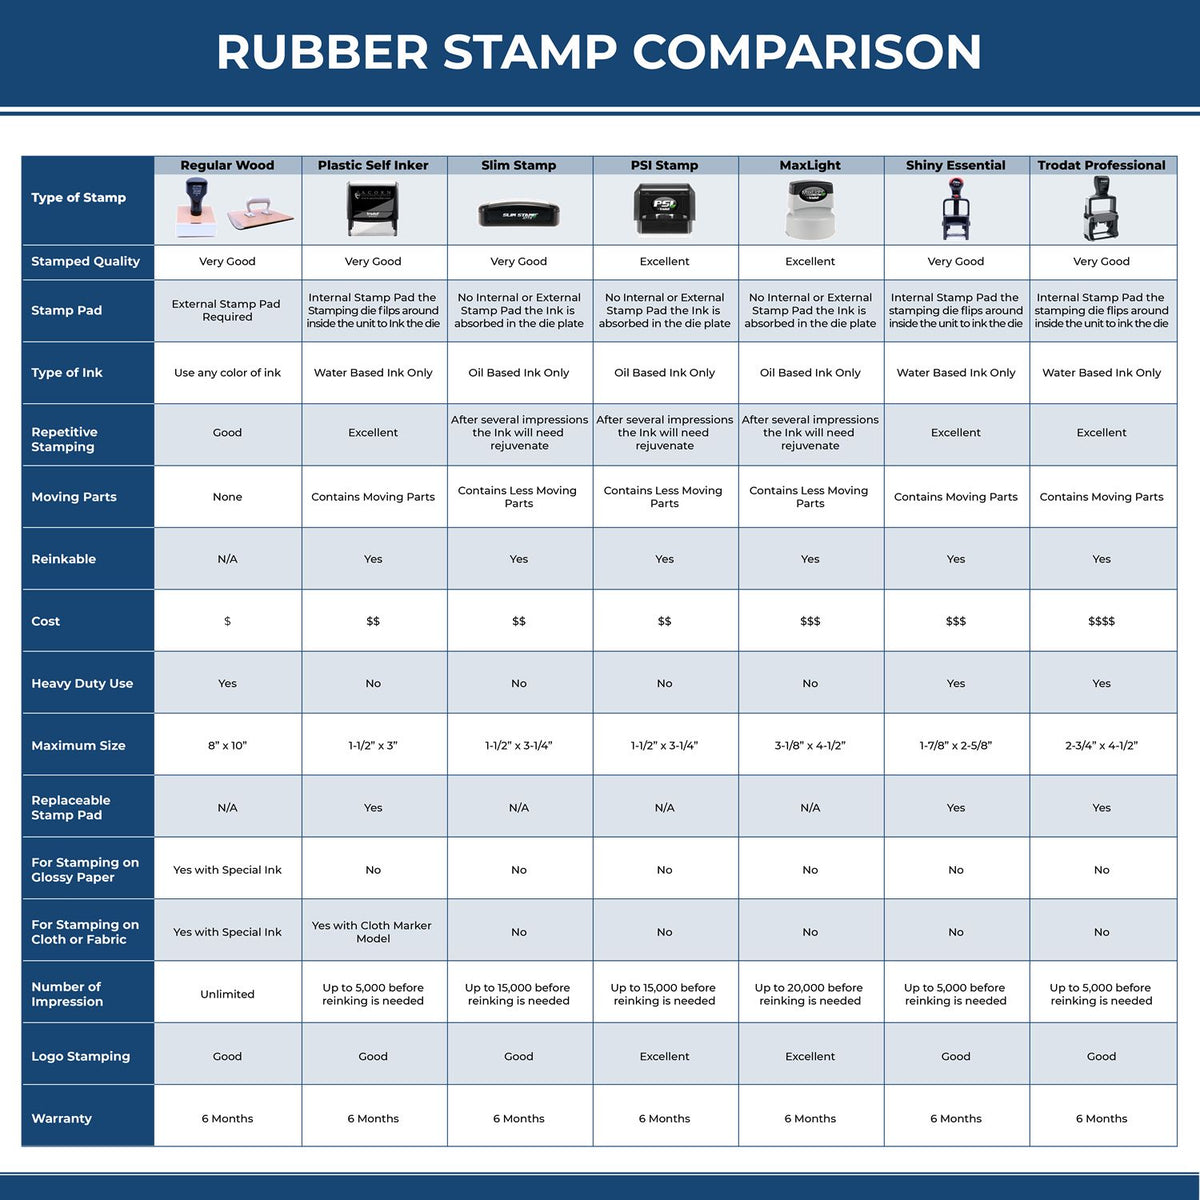 Jumbo Red Copy Xstamper Stamp 5102 Rubber Stamp Comparison